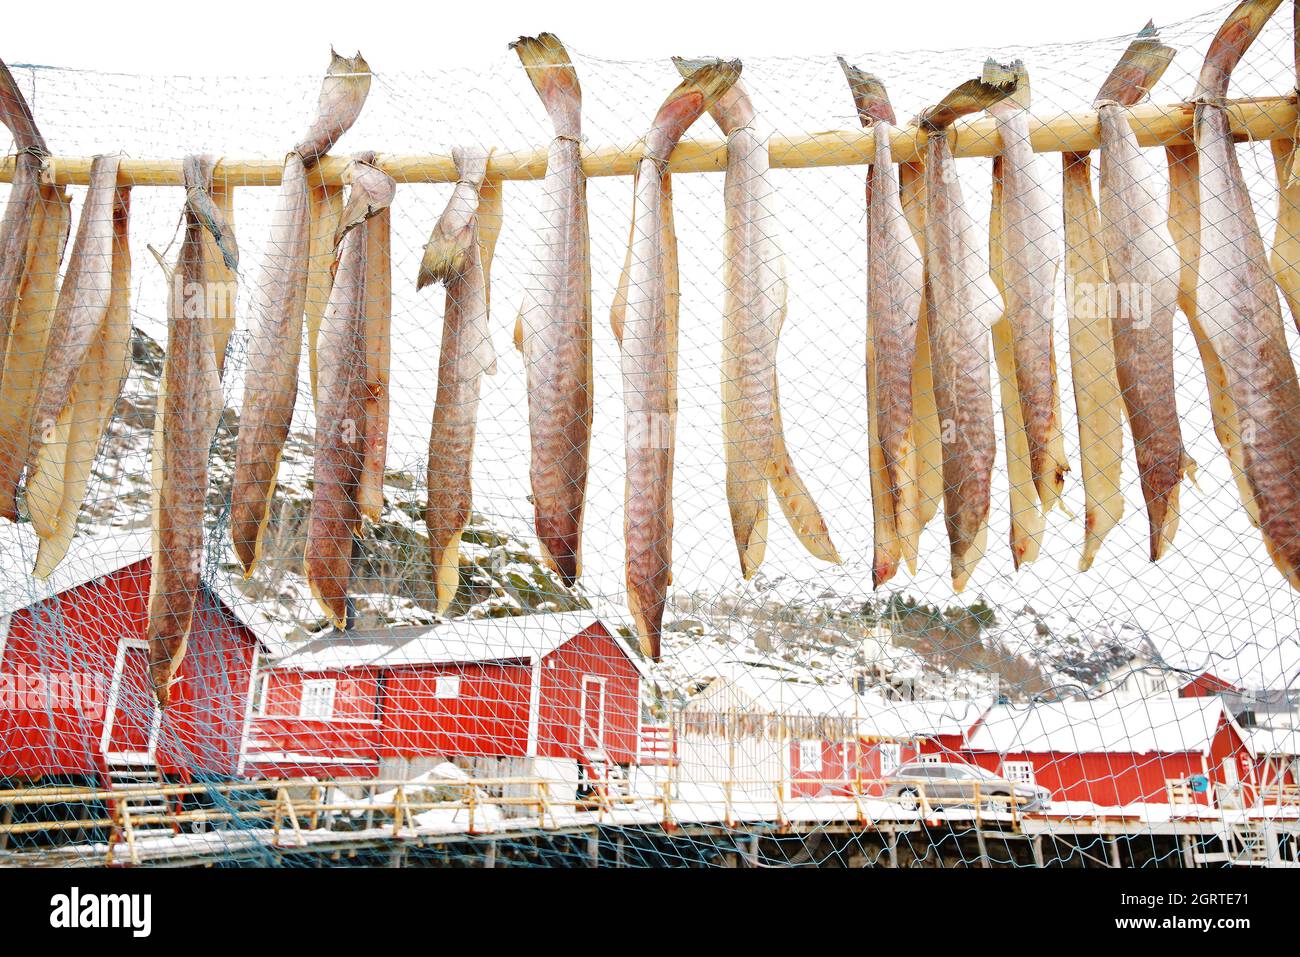 Fish Drying On Bamboo By Fishing Net Stock Photo